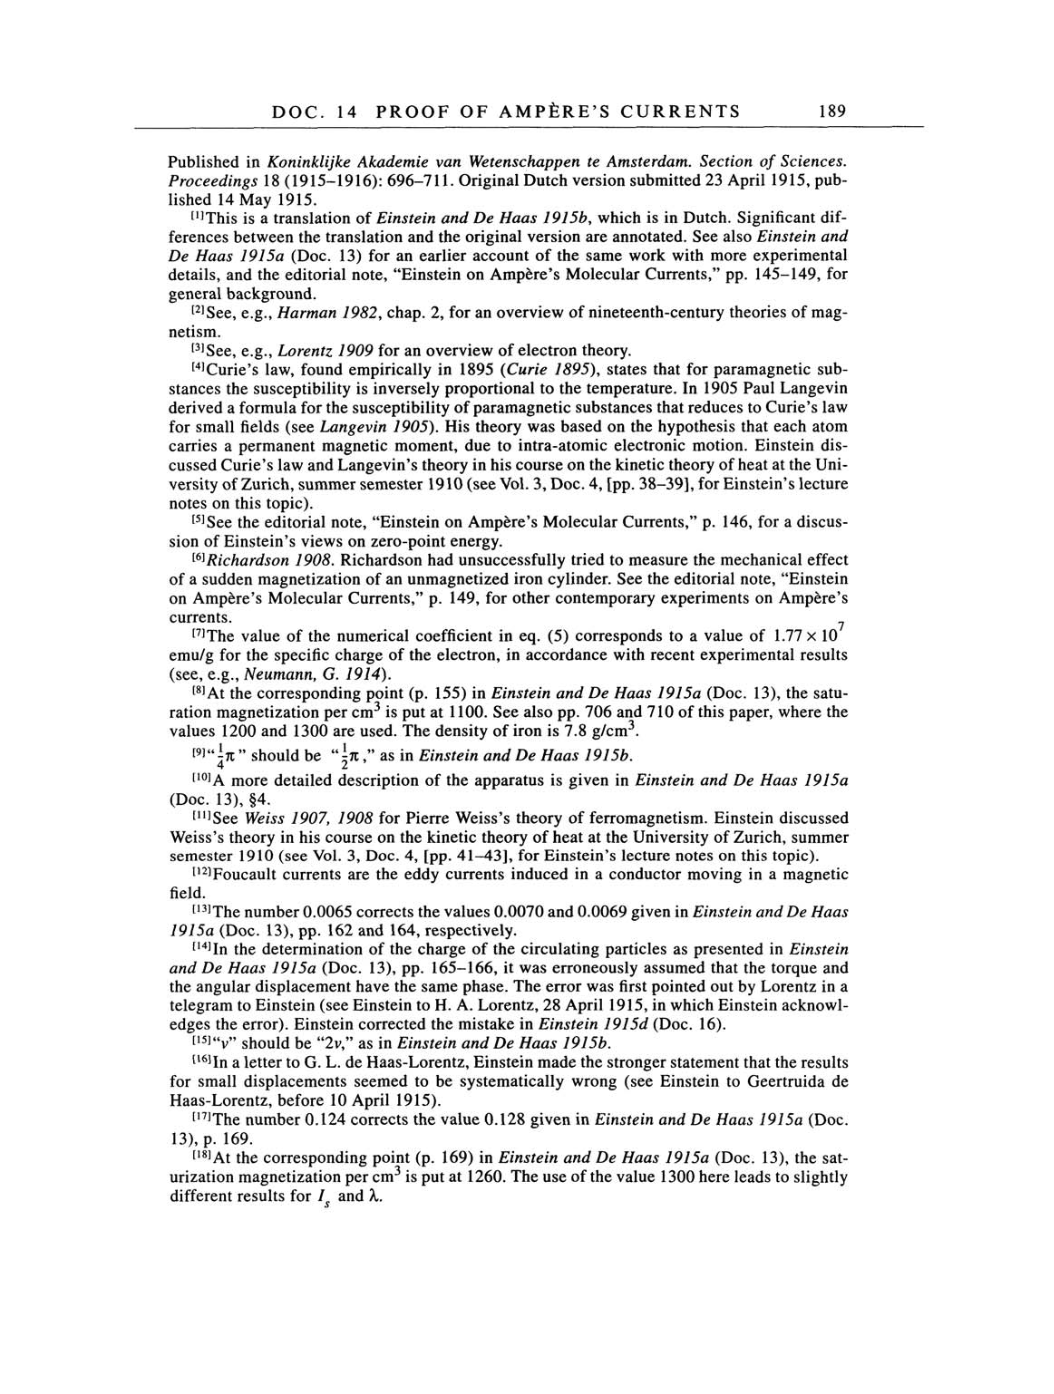 Volume 6: The Berlin Years: Writings, 1914-1917 page 189